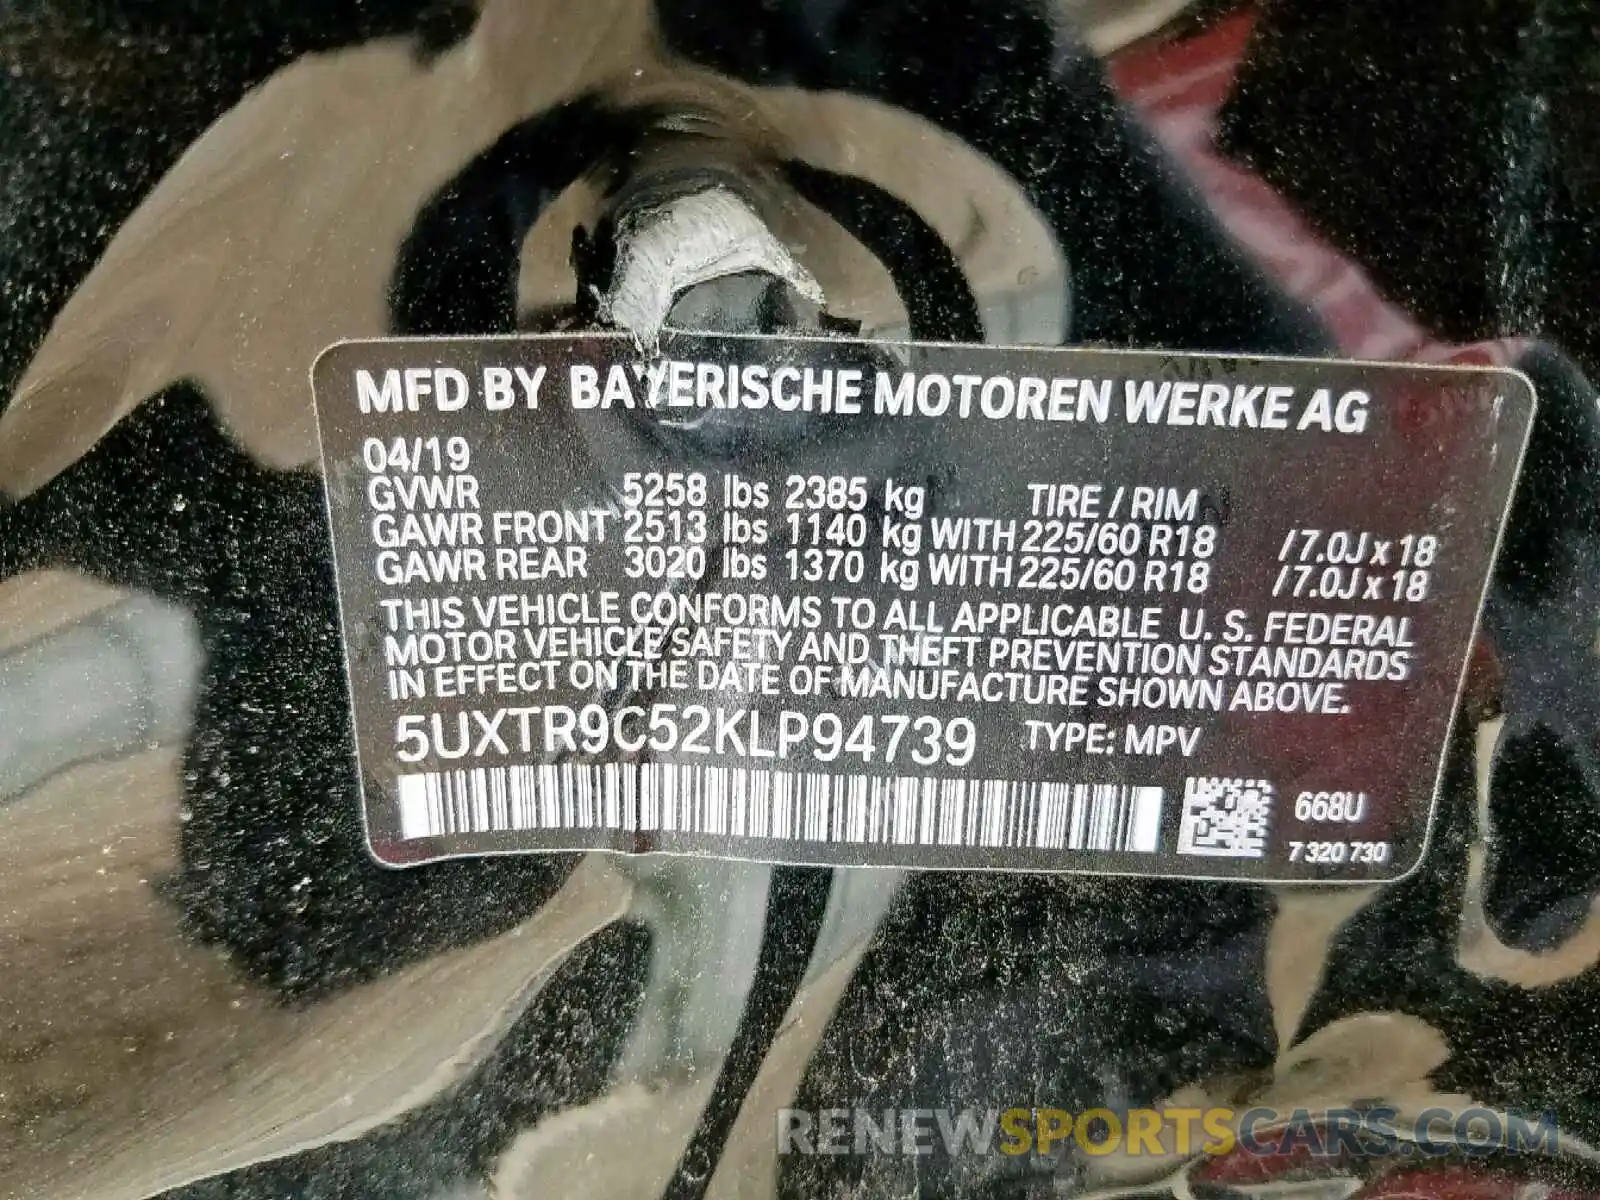 10 Photograph of a damaged car 5UXTR9C52KLP94739 BMW X3 2019